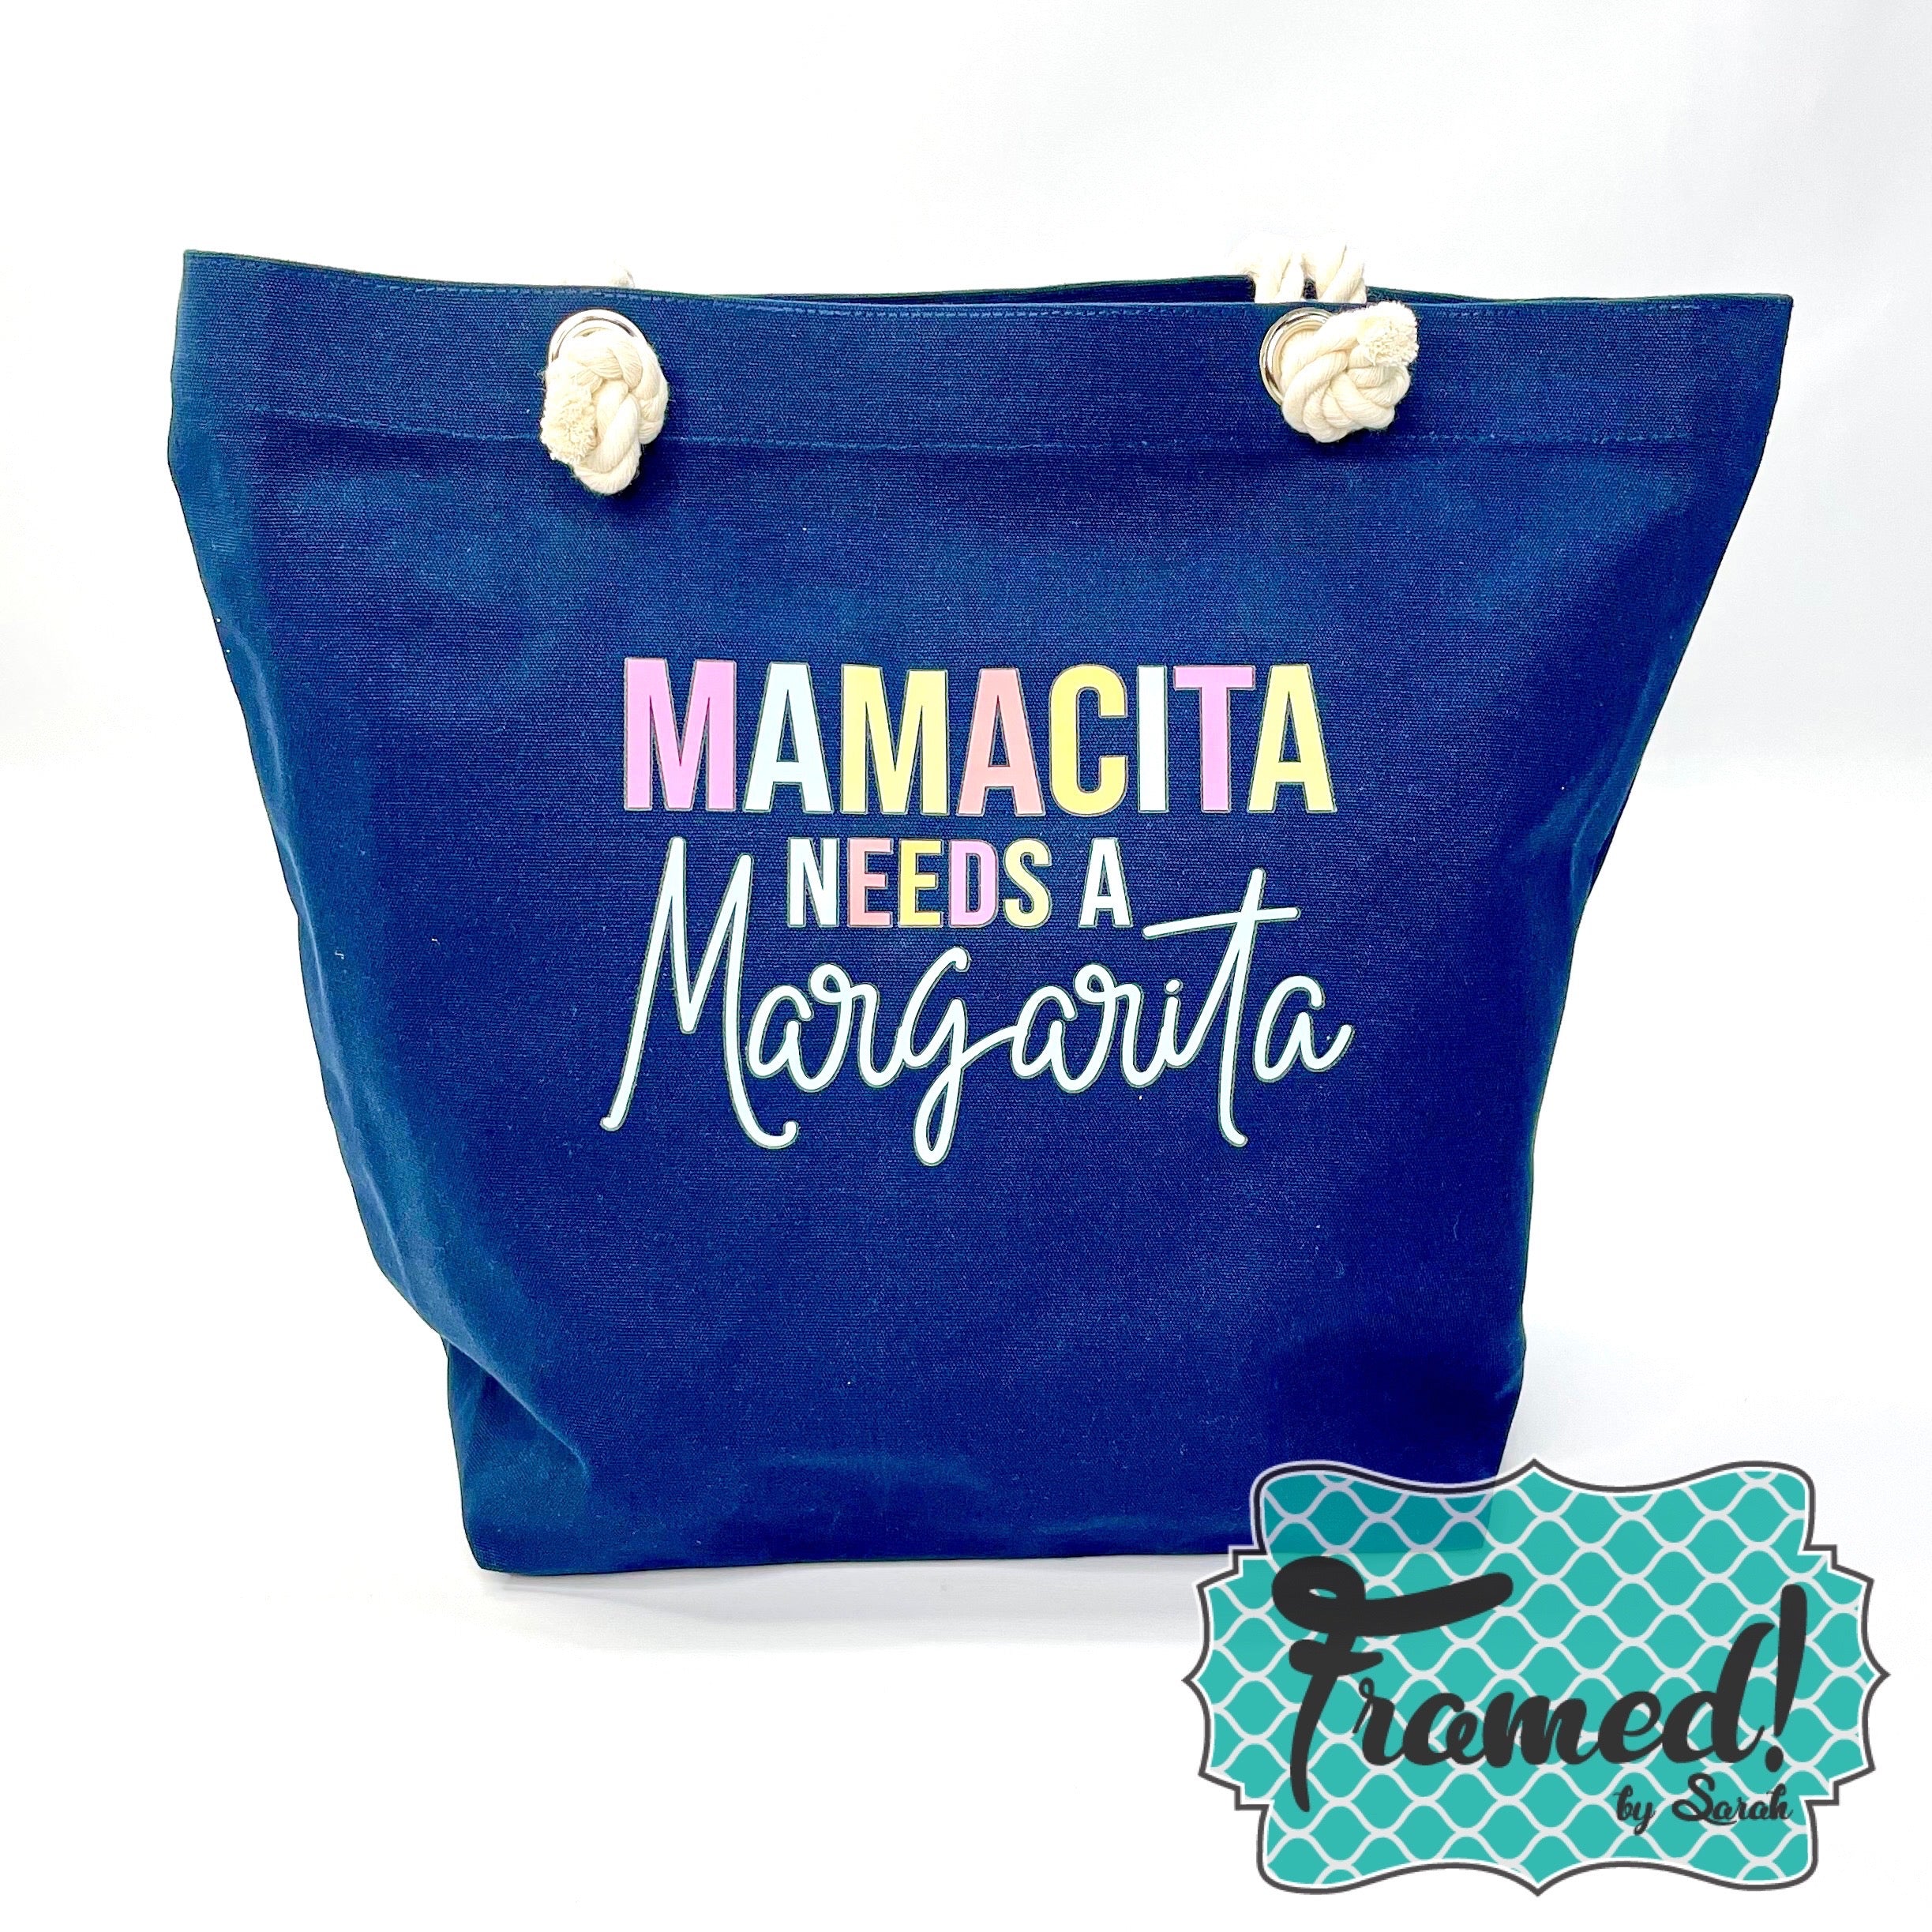 "Mamacita needs a Margarita" Canvas Tote